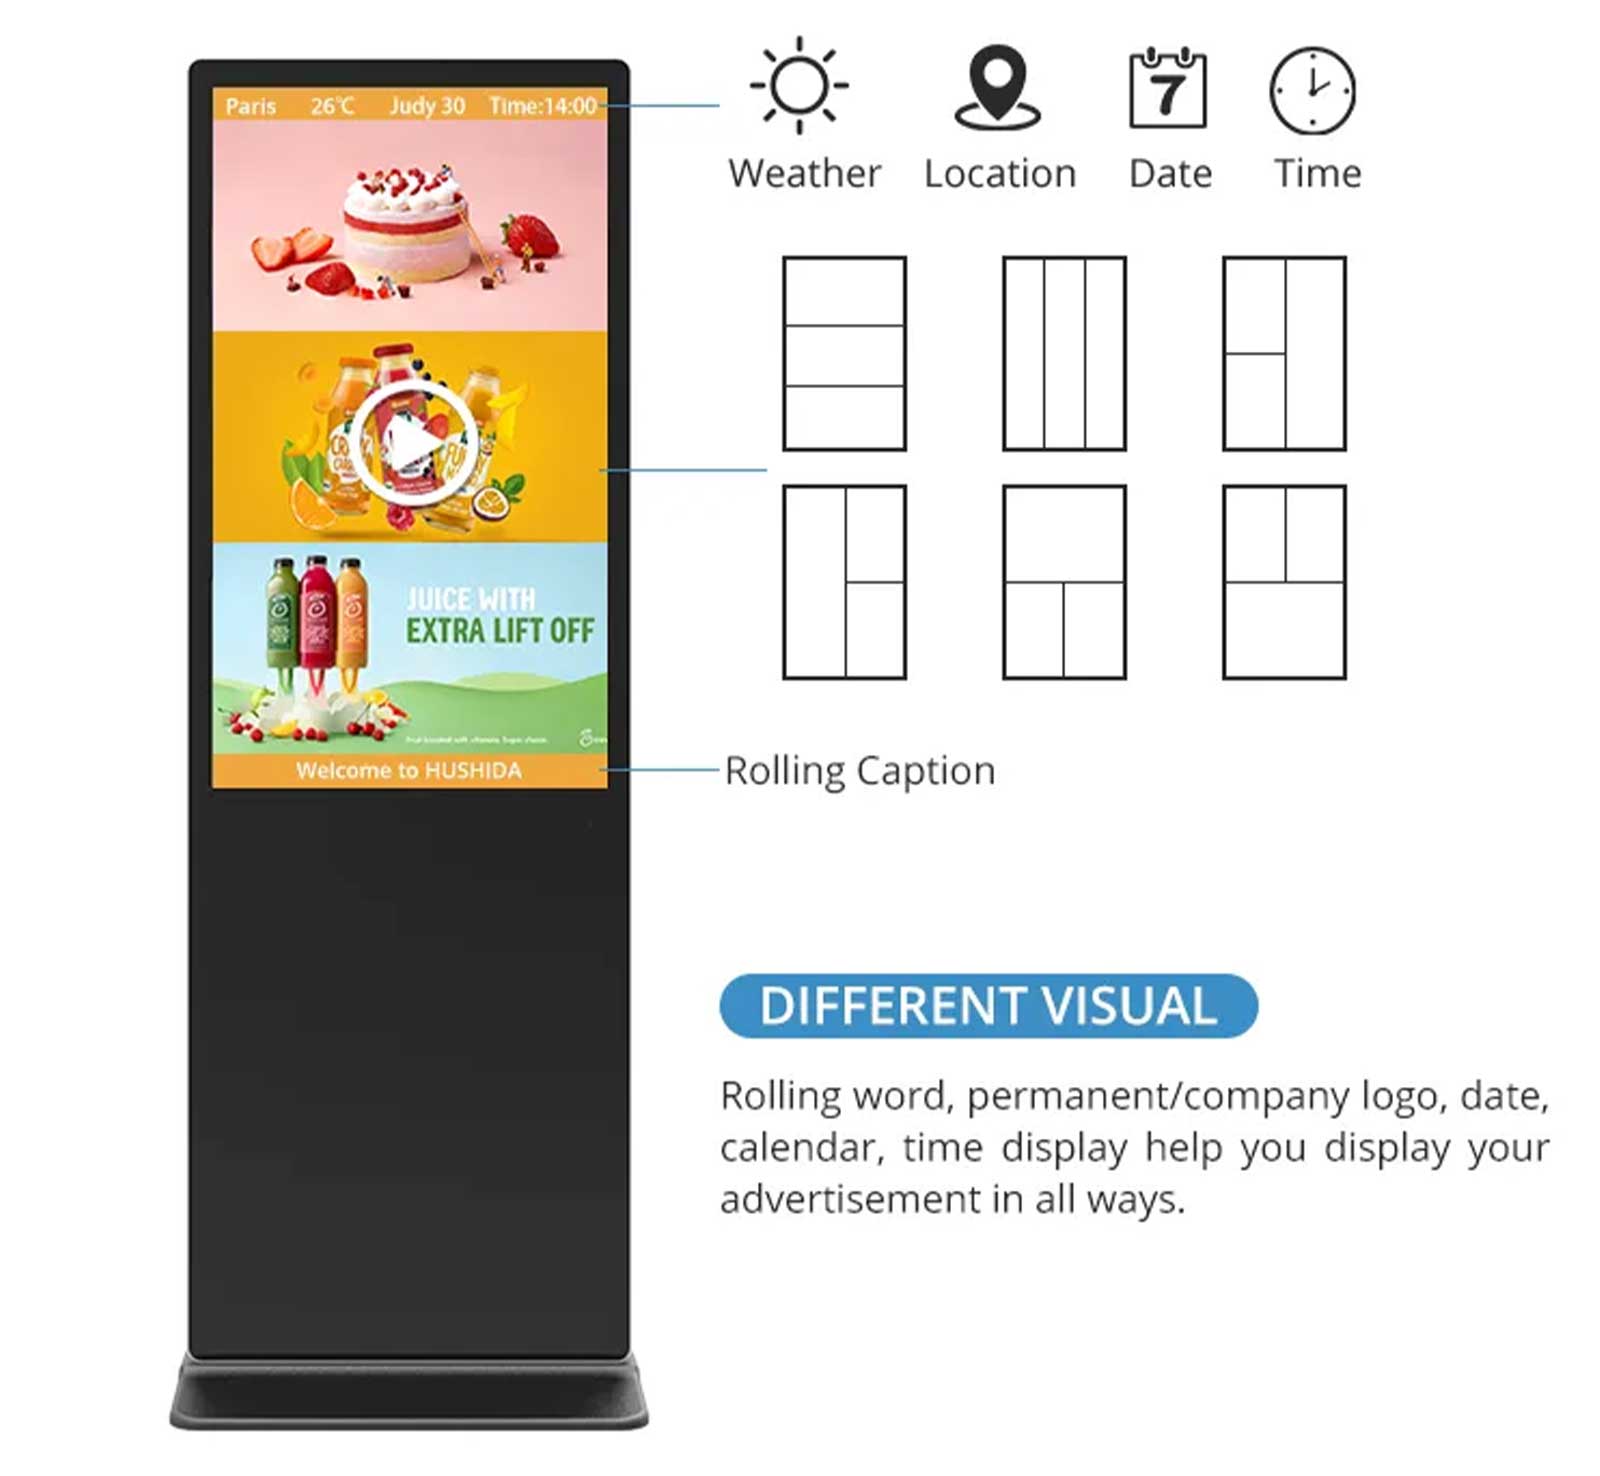 LCD TV Touch Screens Kiosk